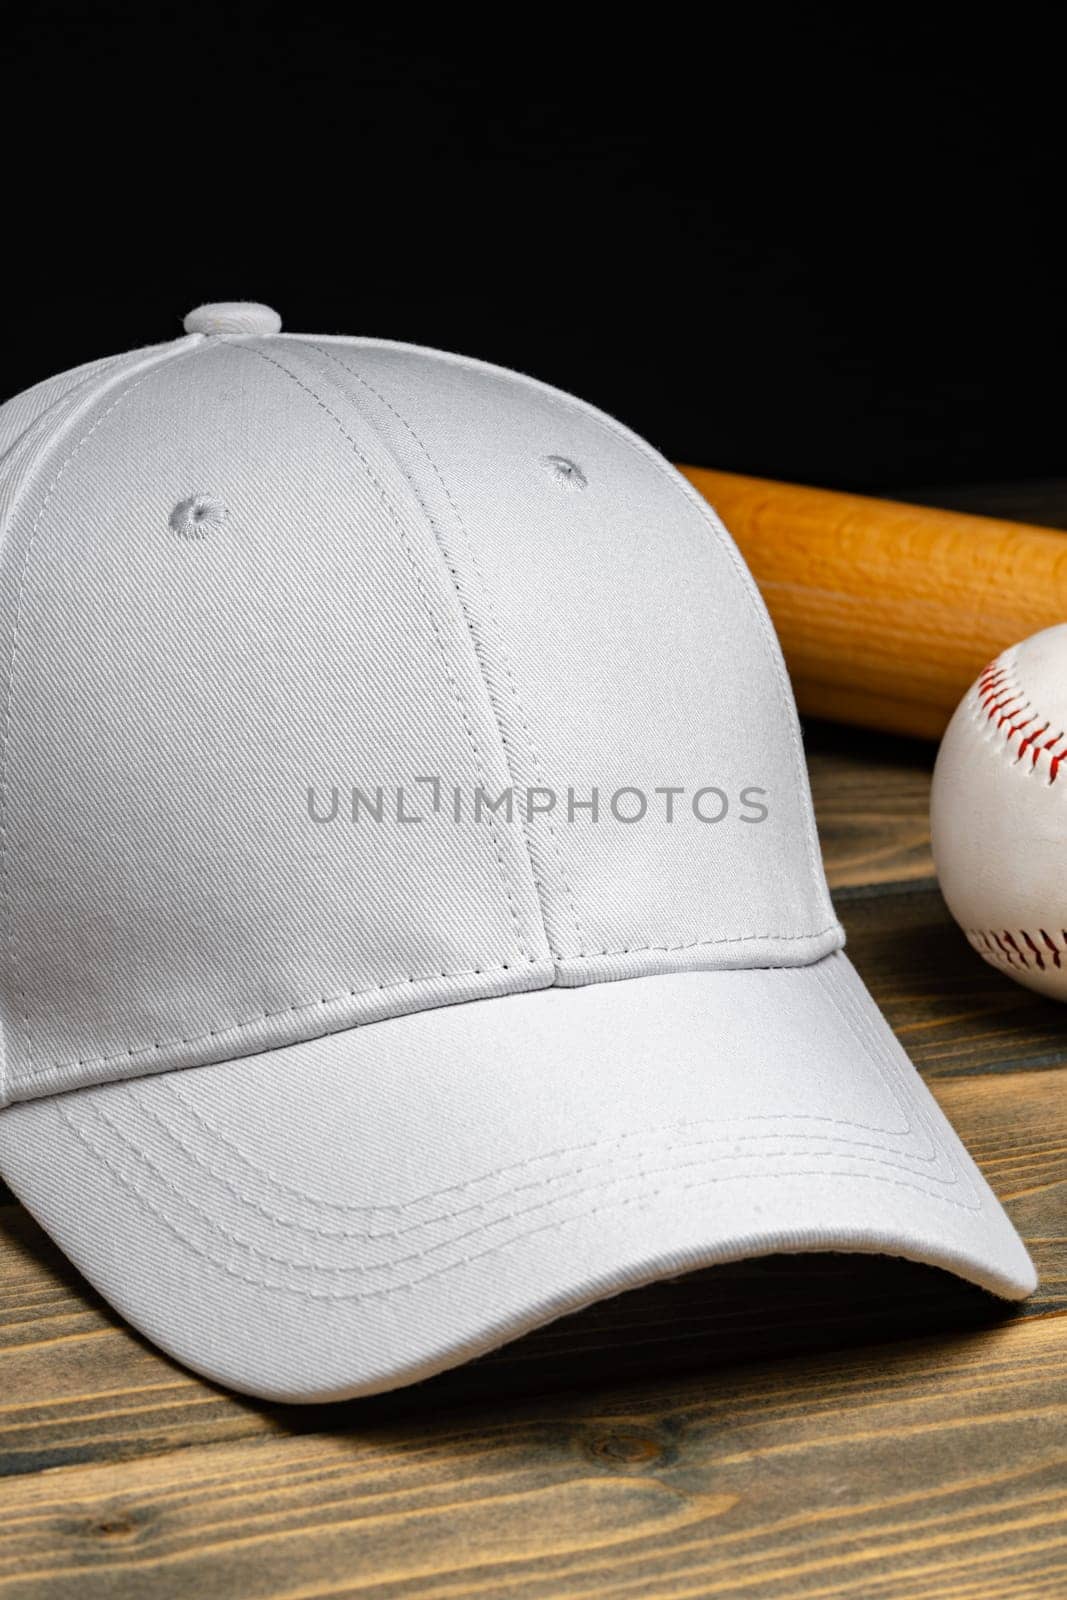 Baseball cap, ball and bat on wooden background by Fabrikasimf